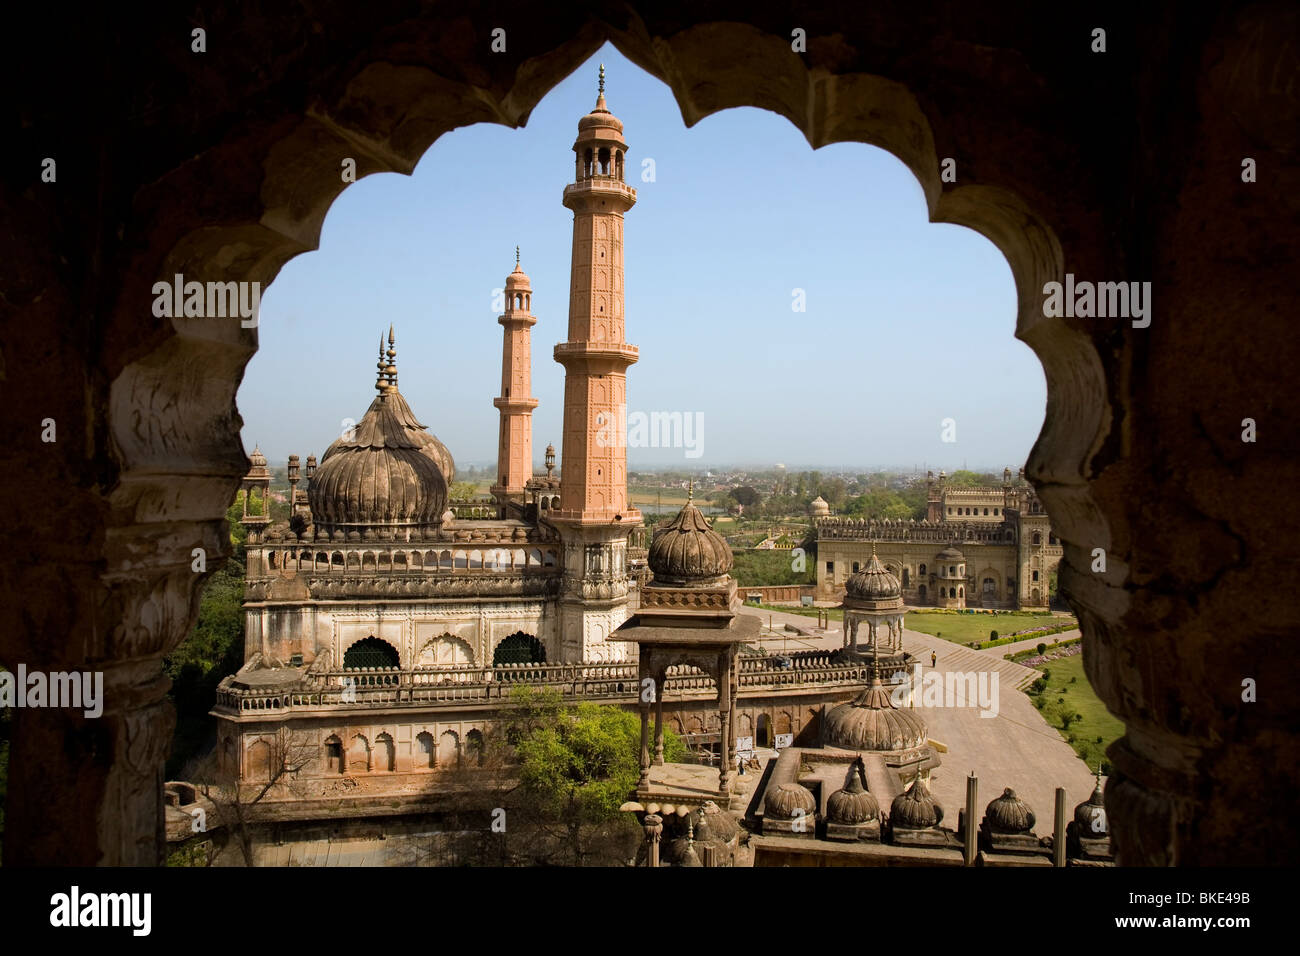 L'intérieur de la mosquée Asfi-bara Imambara complexe, Lucknow, Uttar Pradesh, Inde Banque D'Images